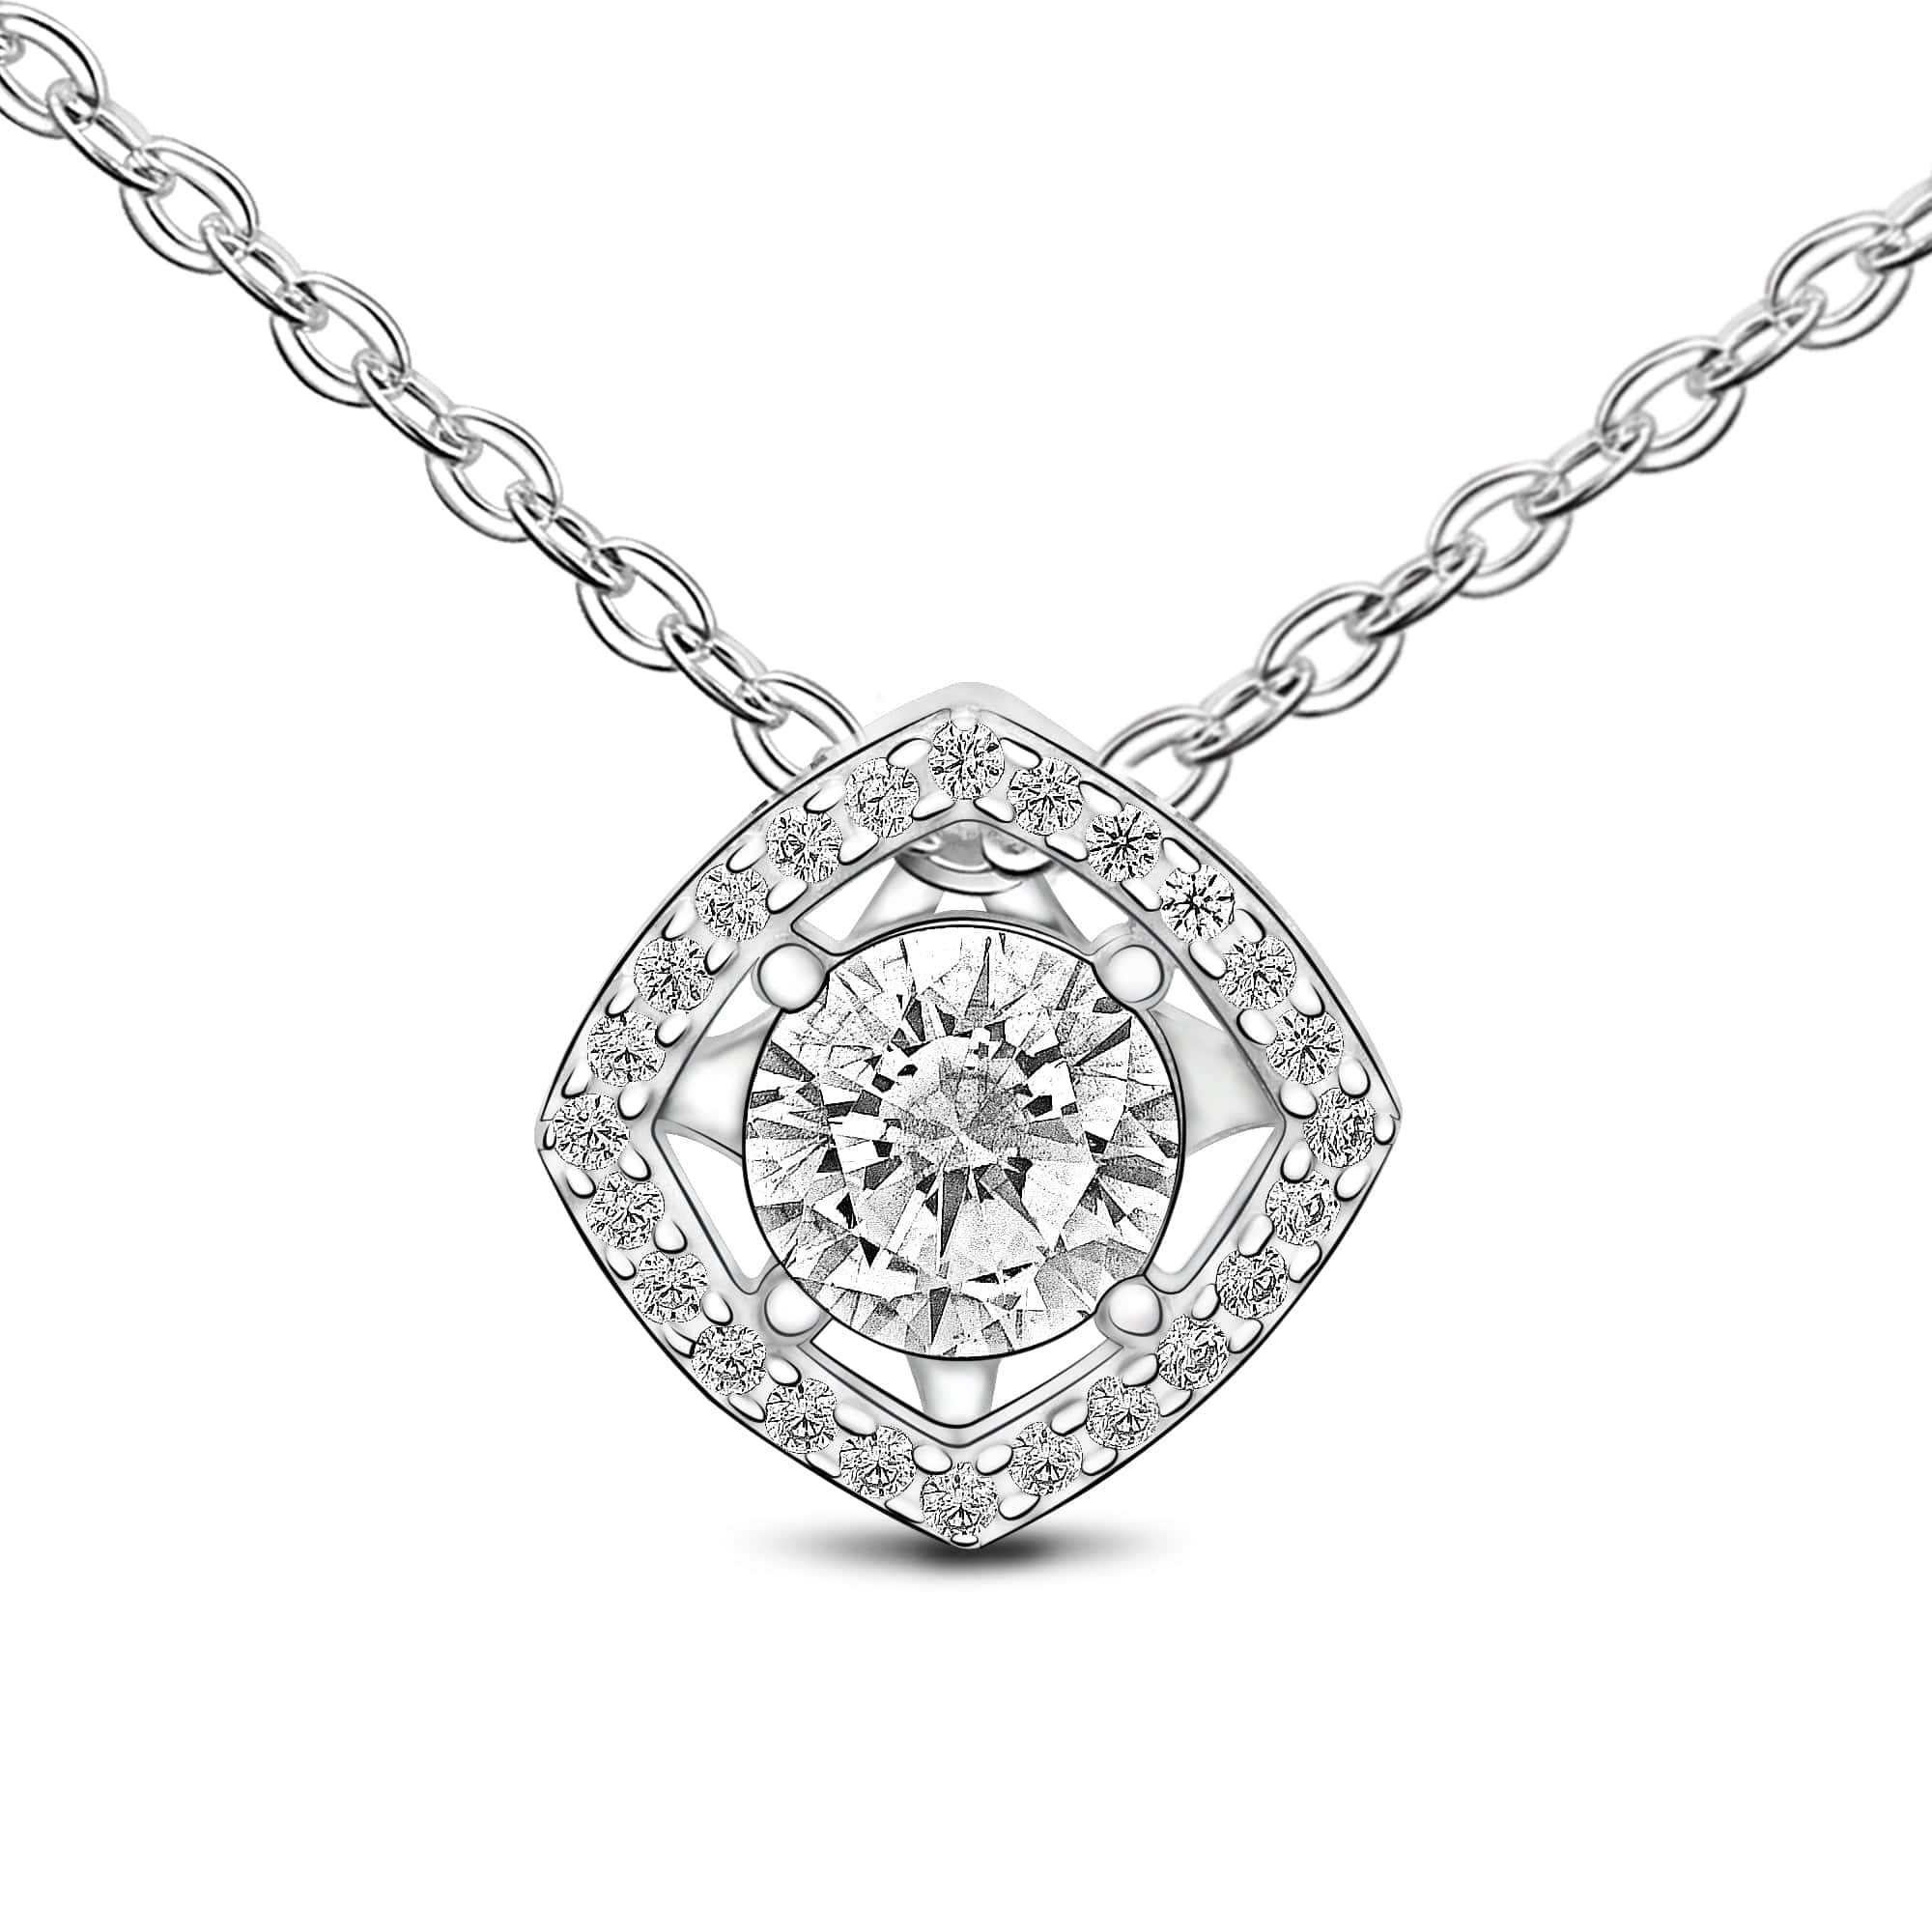 CZ Silver Necklace with Square Pendant Pendant Necklace